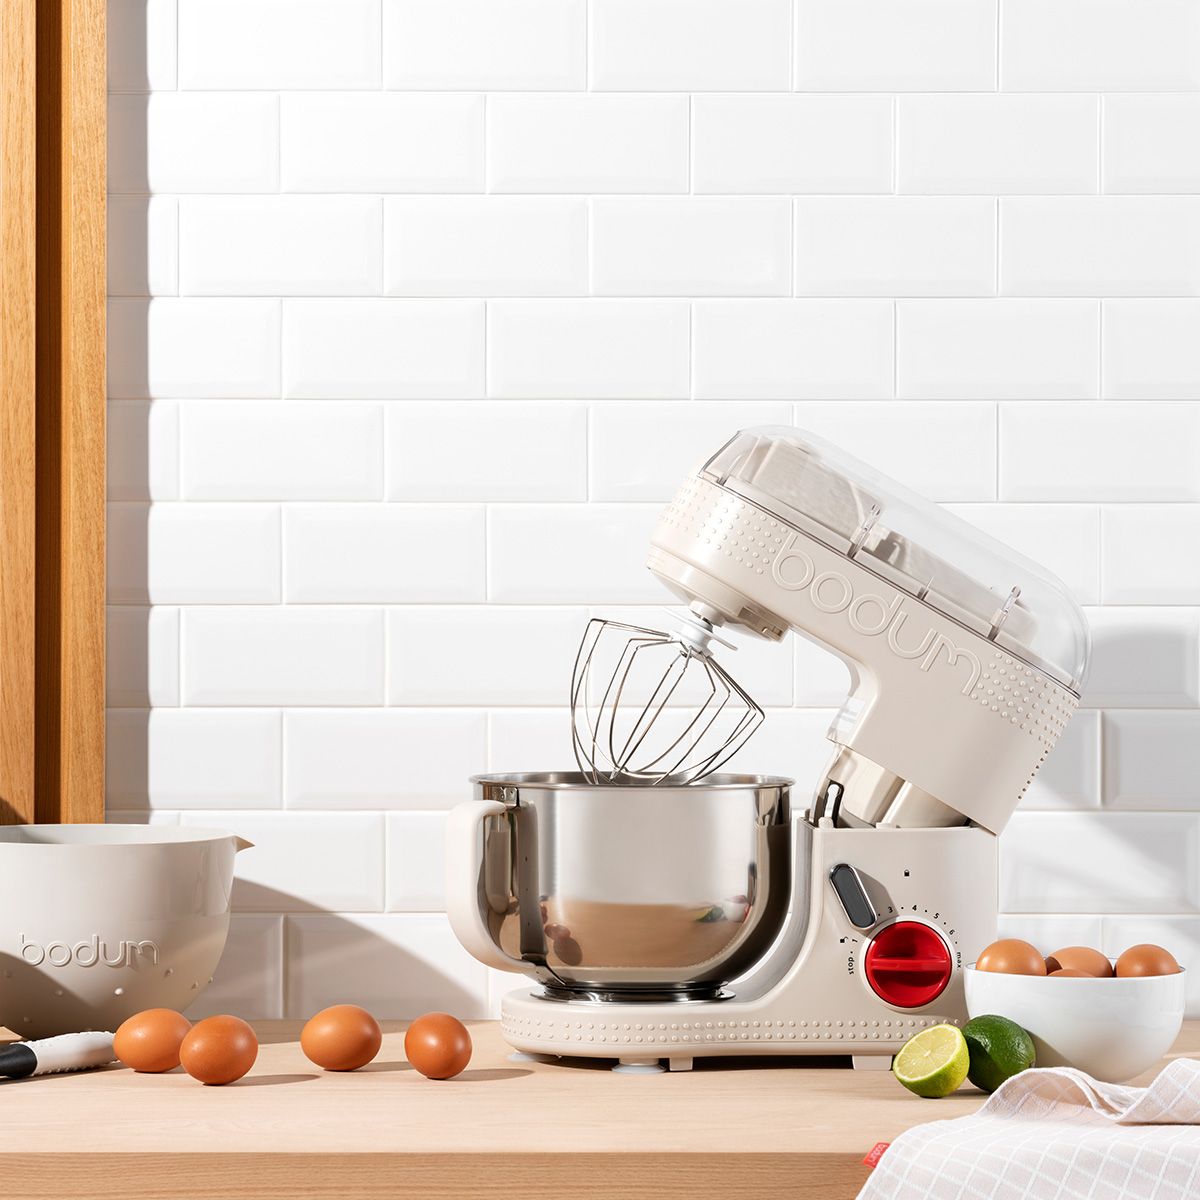 Elektrický kuchyňský robot body bistro, krém